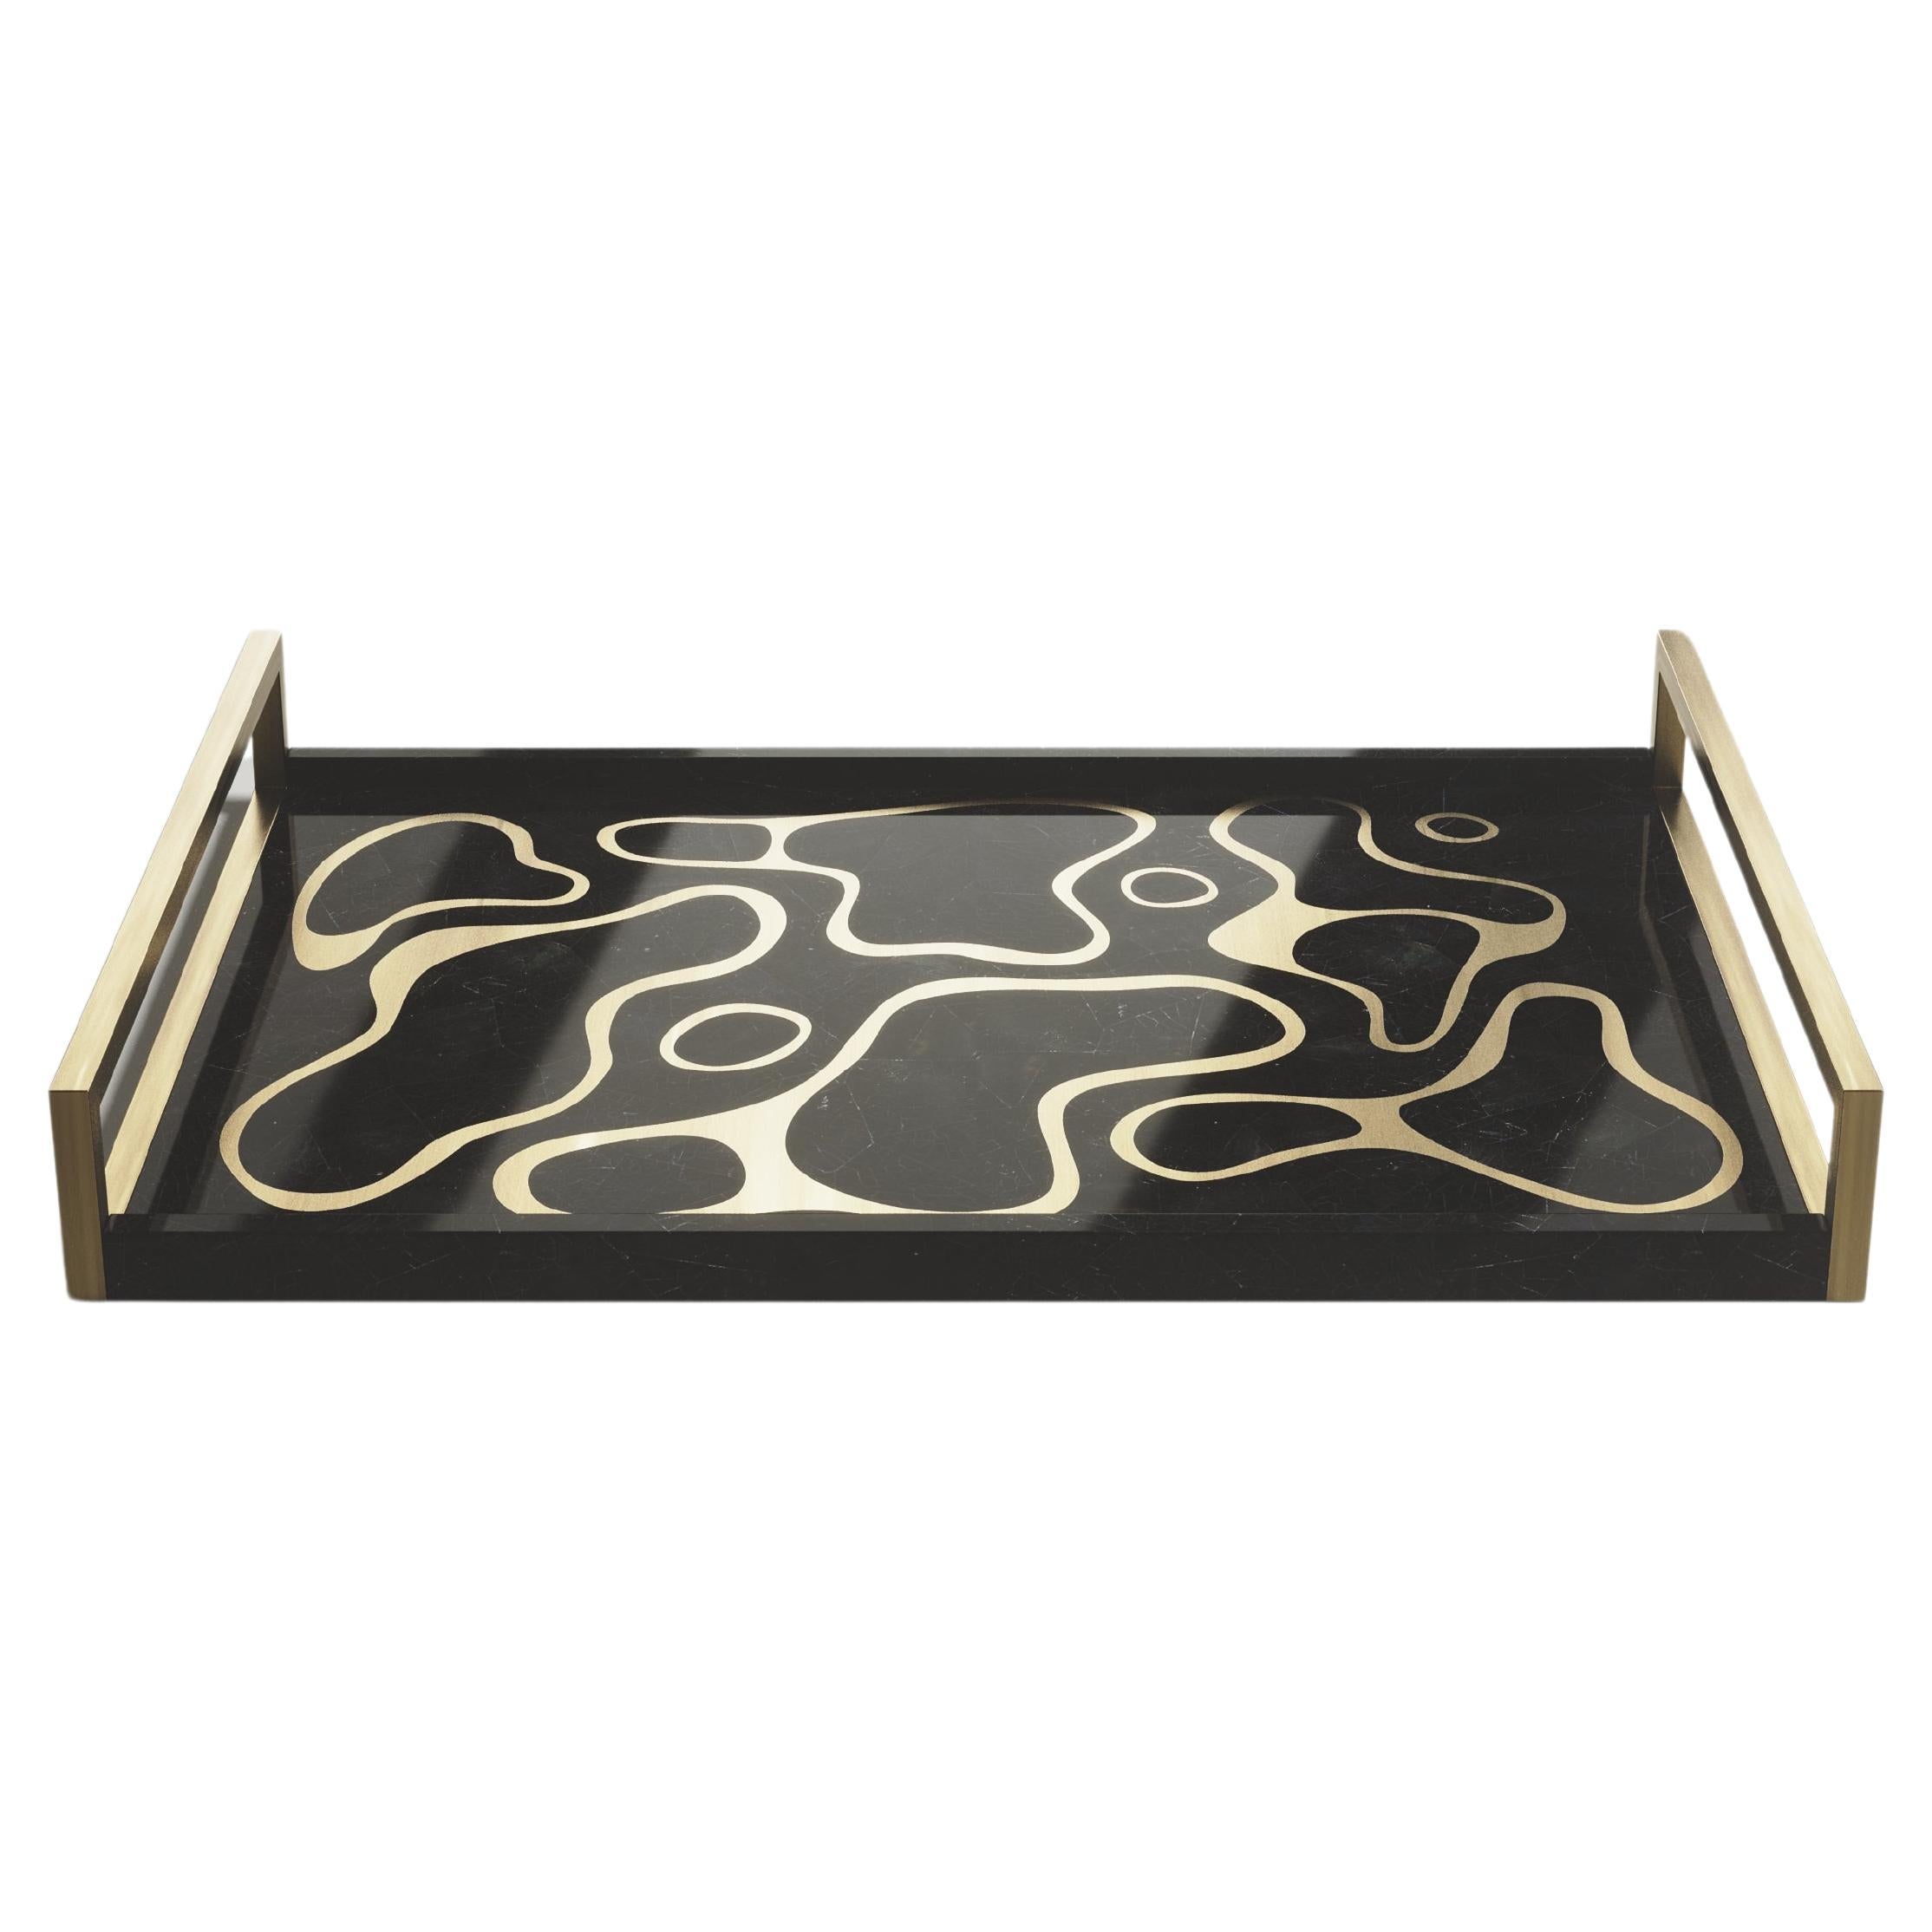 Rectangular Tray in Black Pen Shell with Bronze-Patina Brass by Kifu Paris